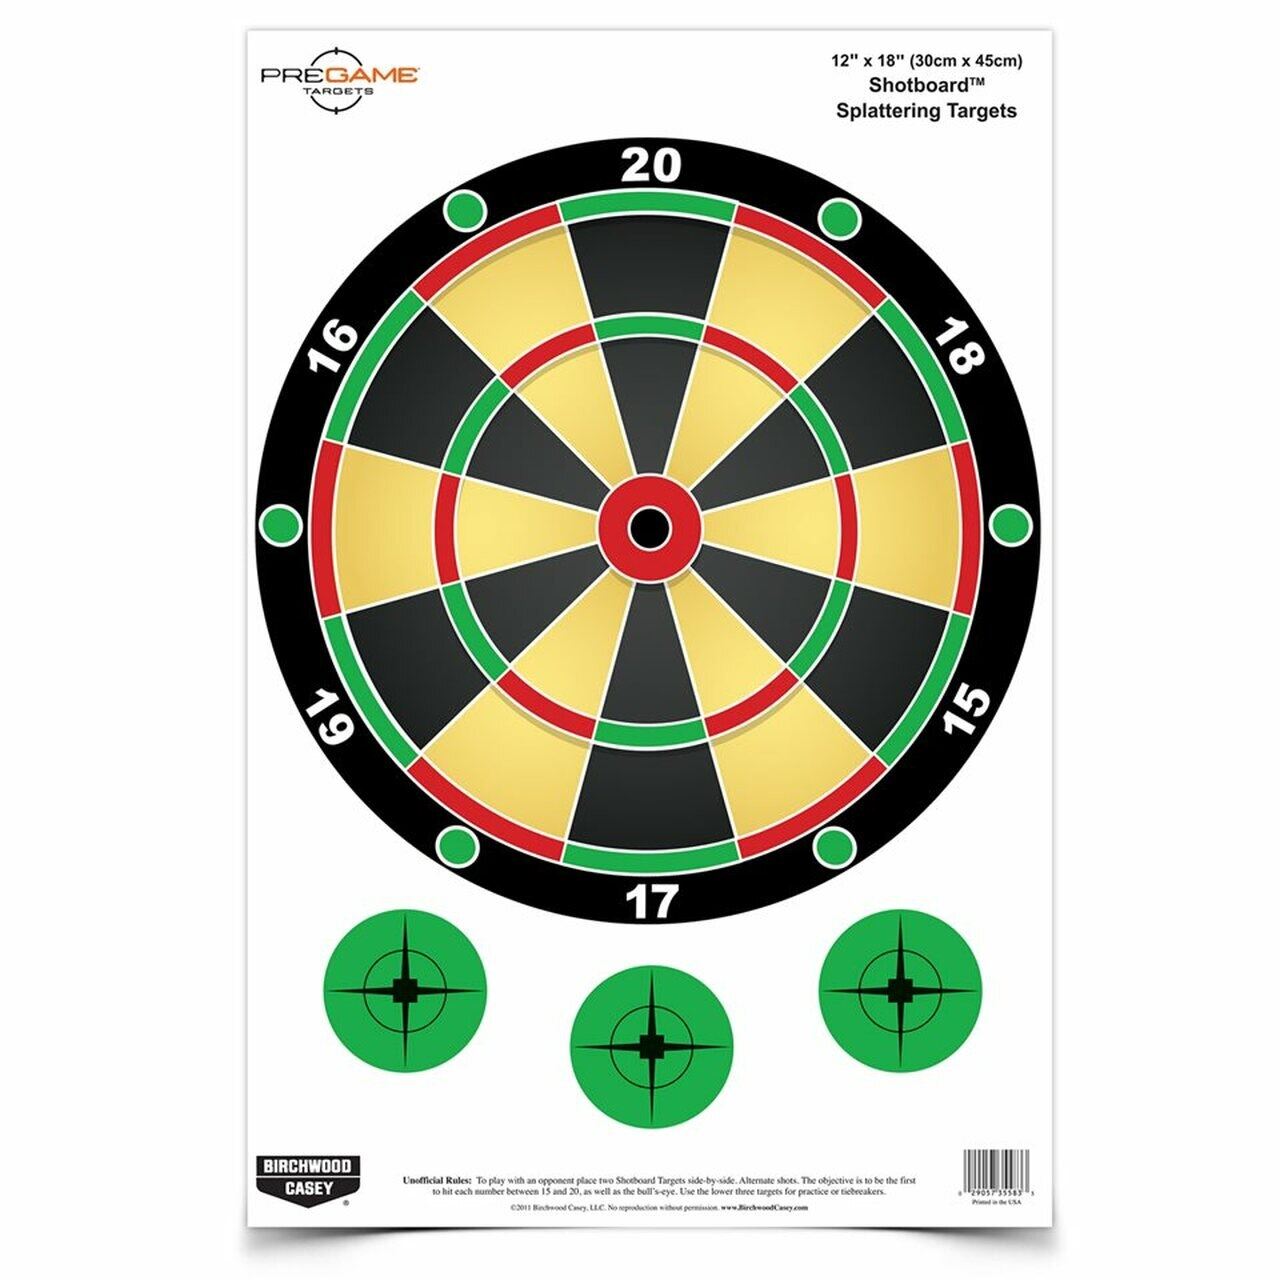 Birchwood Casey 12" x 18" Pregame Shotboard Targets - Pack of 8